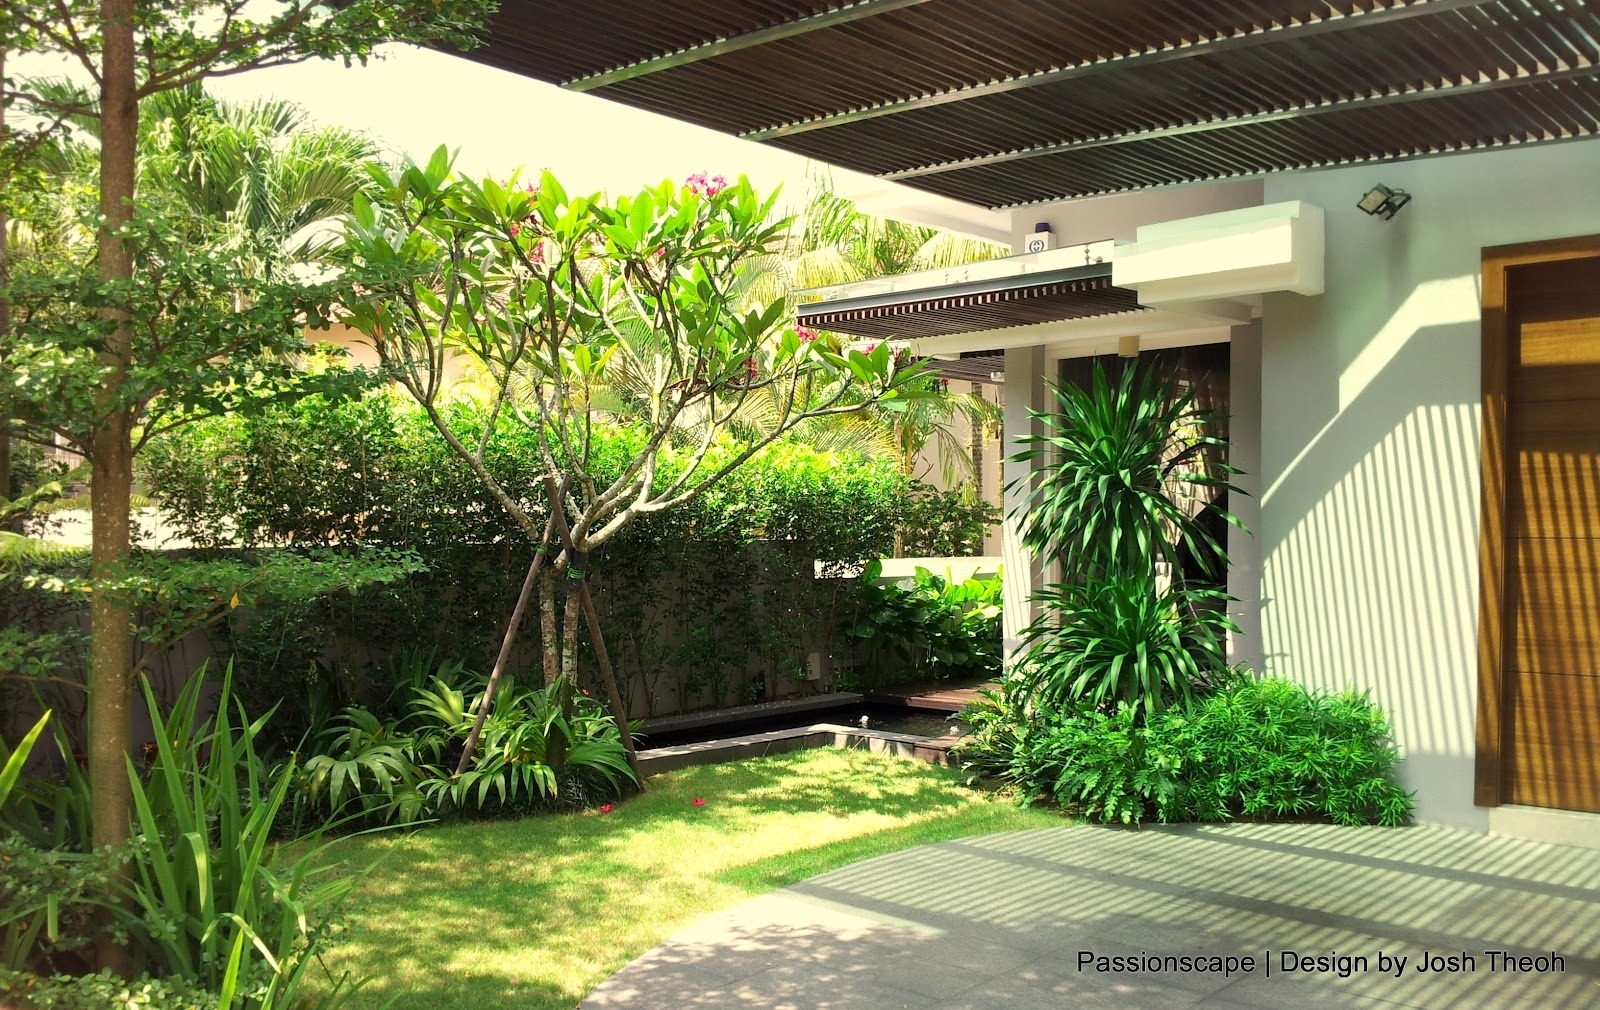 Singapore Landscape Design Garden The Common Denominator Inside Car with regard to measurements 1600 X 1010